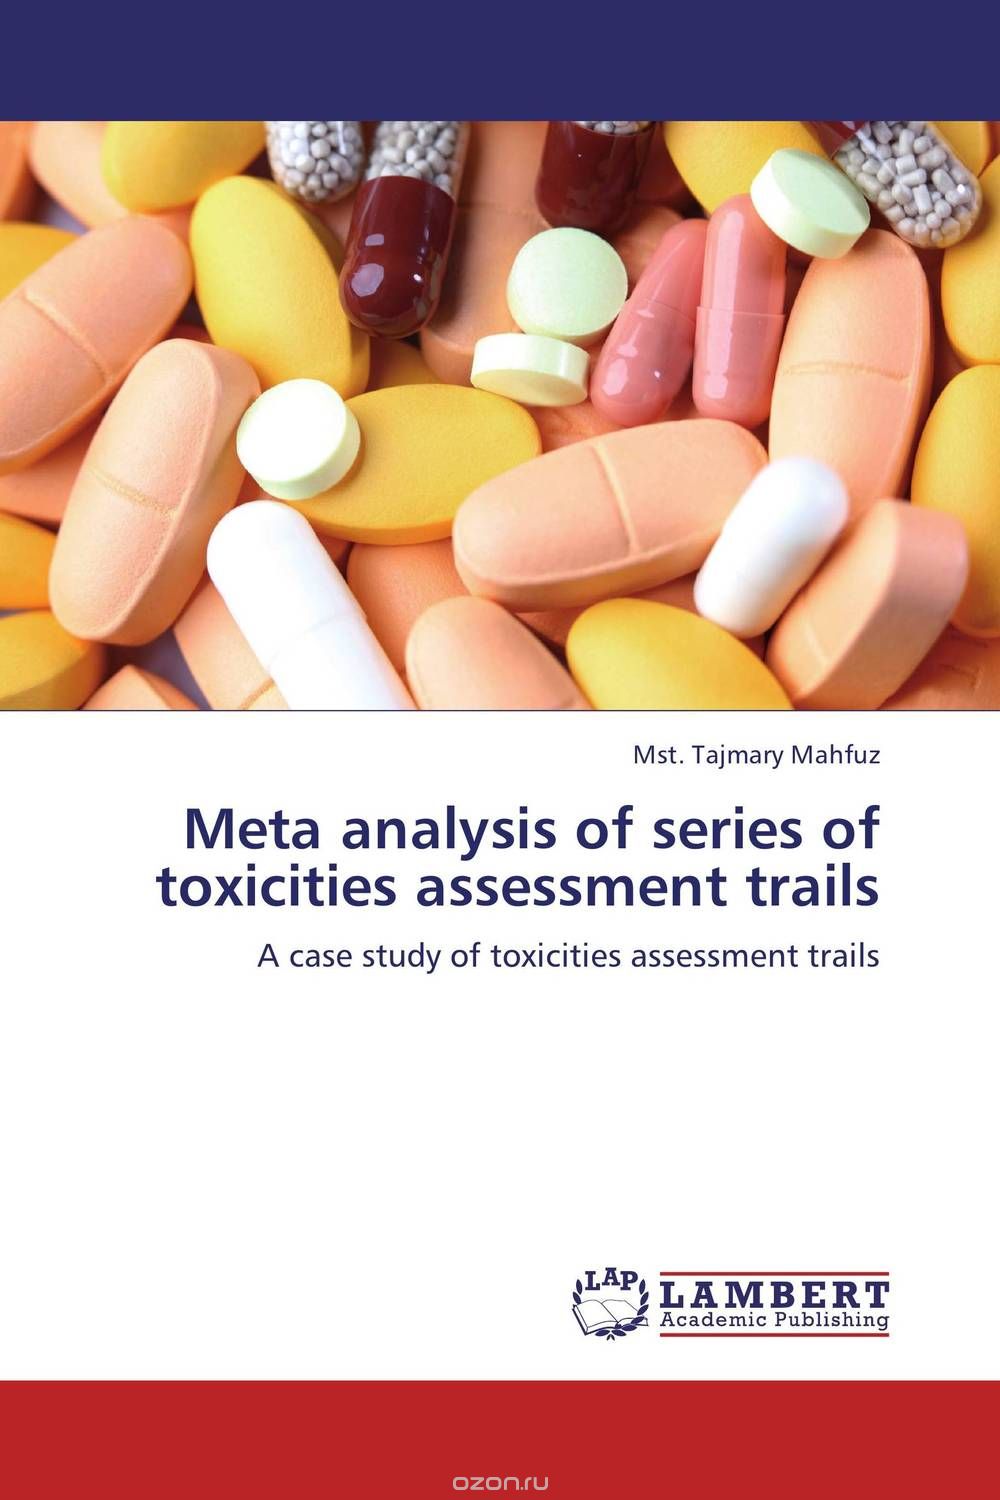 Скачать книгу "Meta analysis of series of toxicities assessment trails"